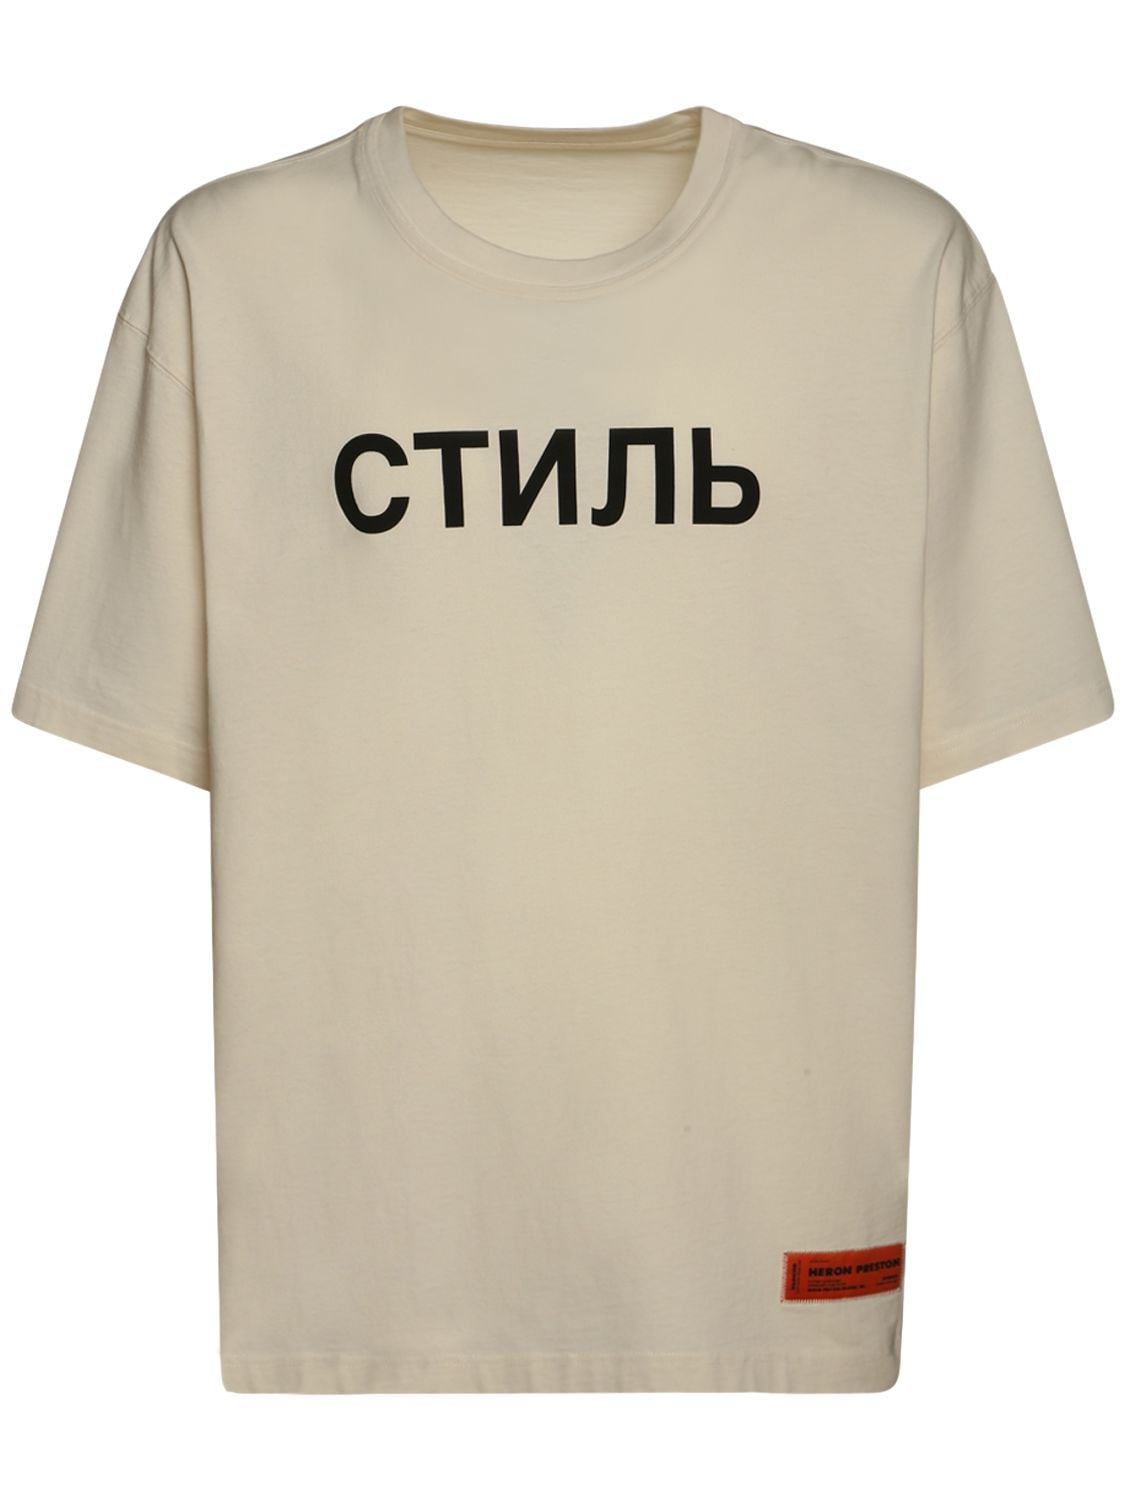 Heron Preston Ctnmb Print Cotton Jersey T-shirt In Off-white,black